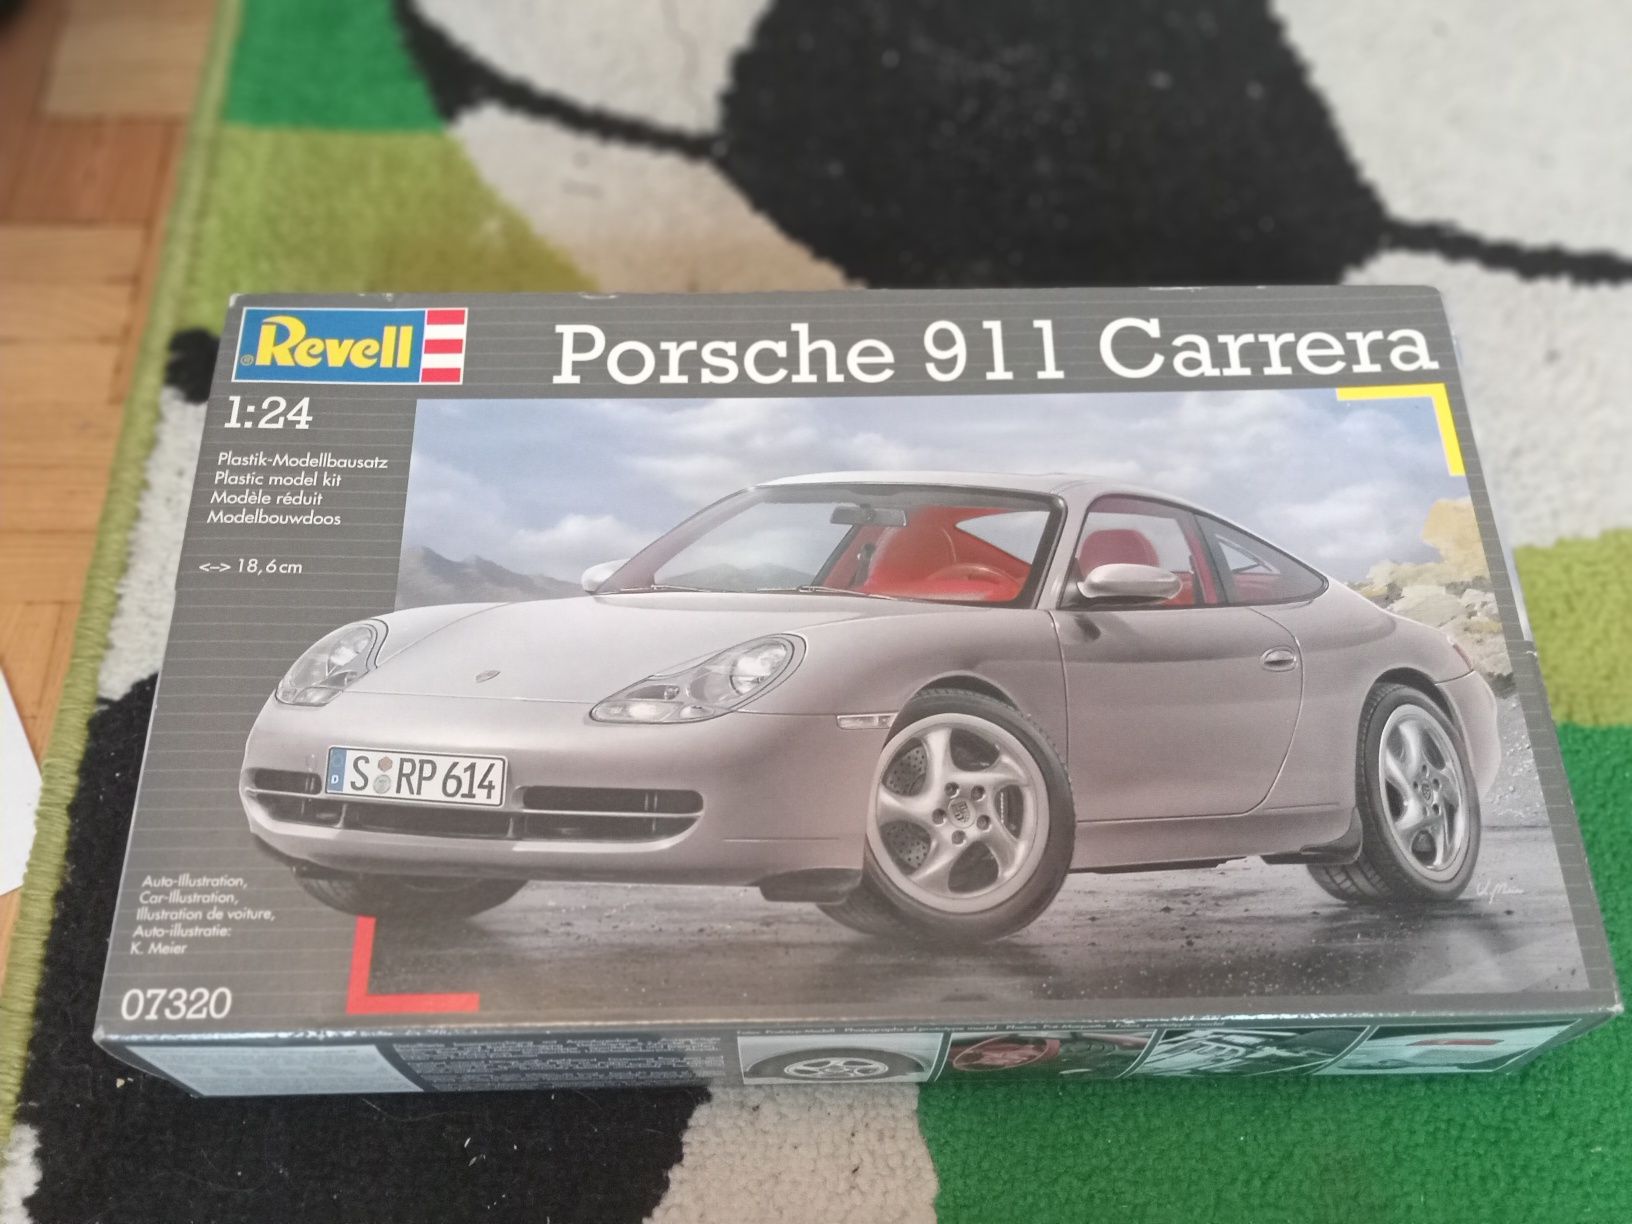 Porsche 911 Carrera REVELL 1:24 MODEL PIĘKNY